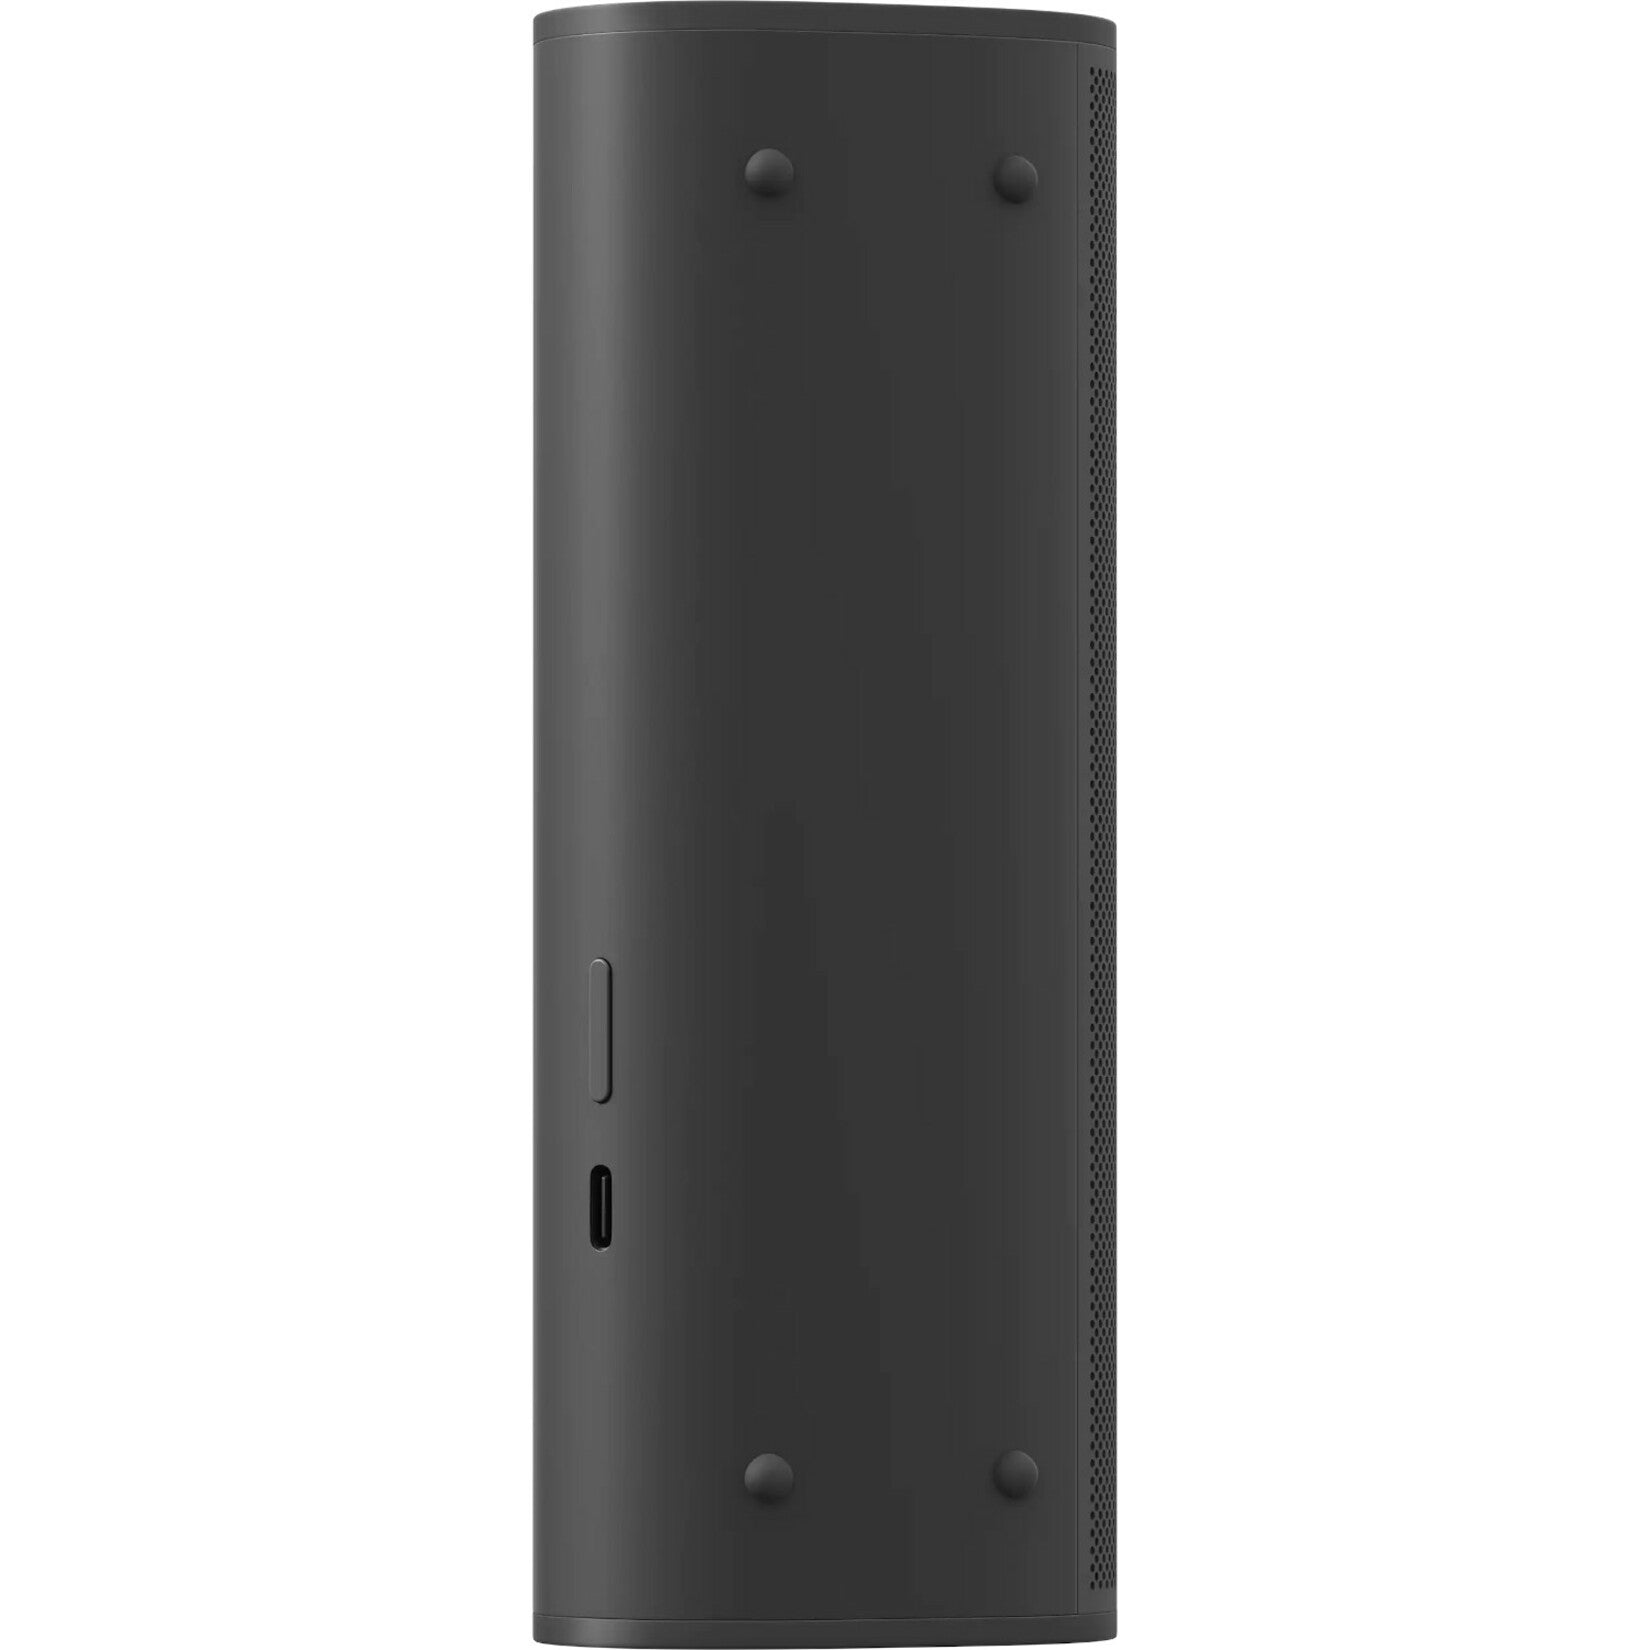 SONOS ROAM1US1BLK Roam Smart Speaker, Portable Wi-Fi and Bluetooth Speaker with Amazon Alexa and Google Assistant, Black